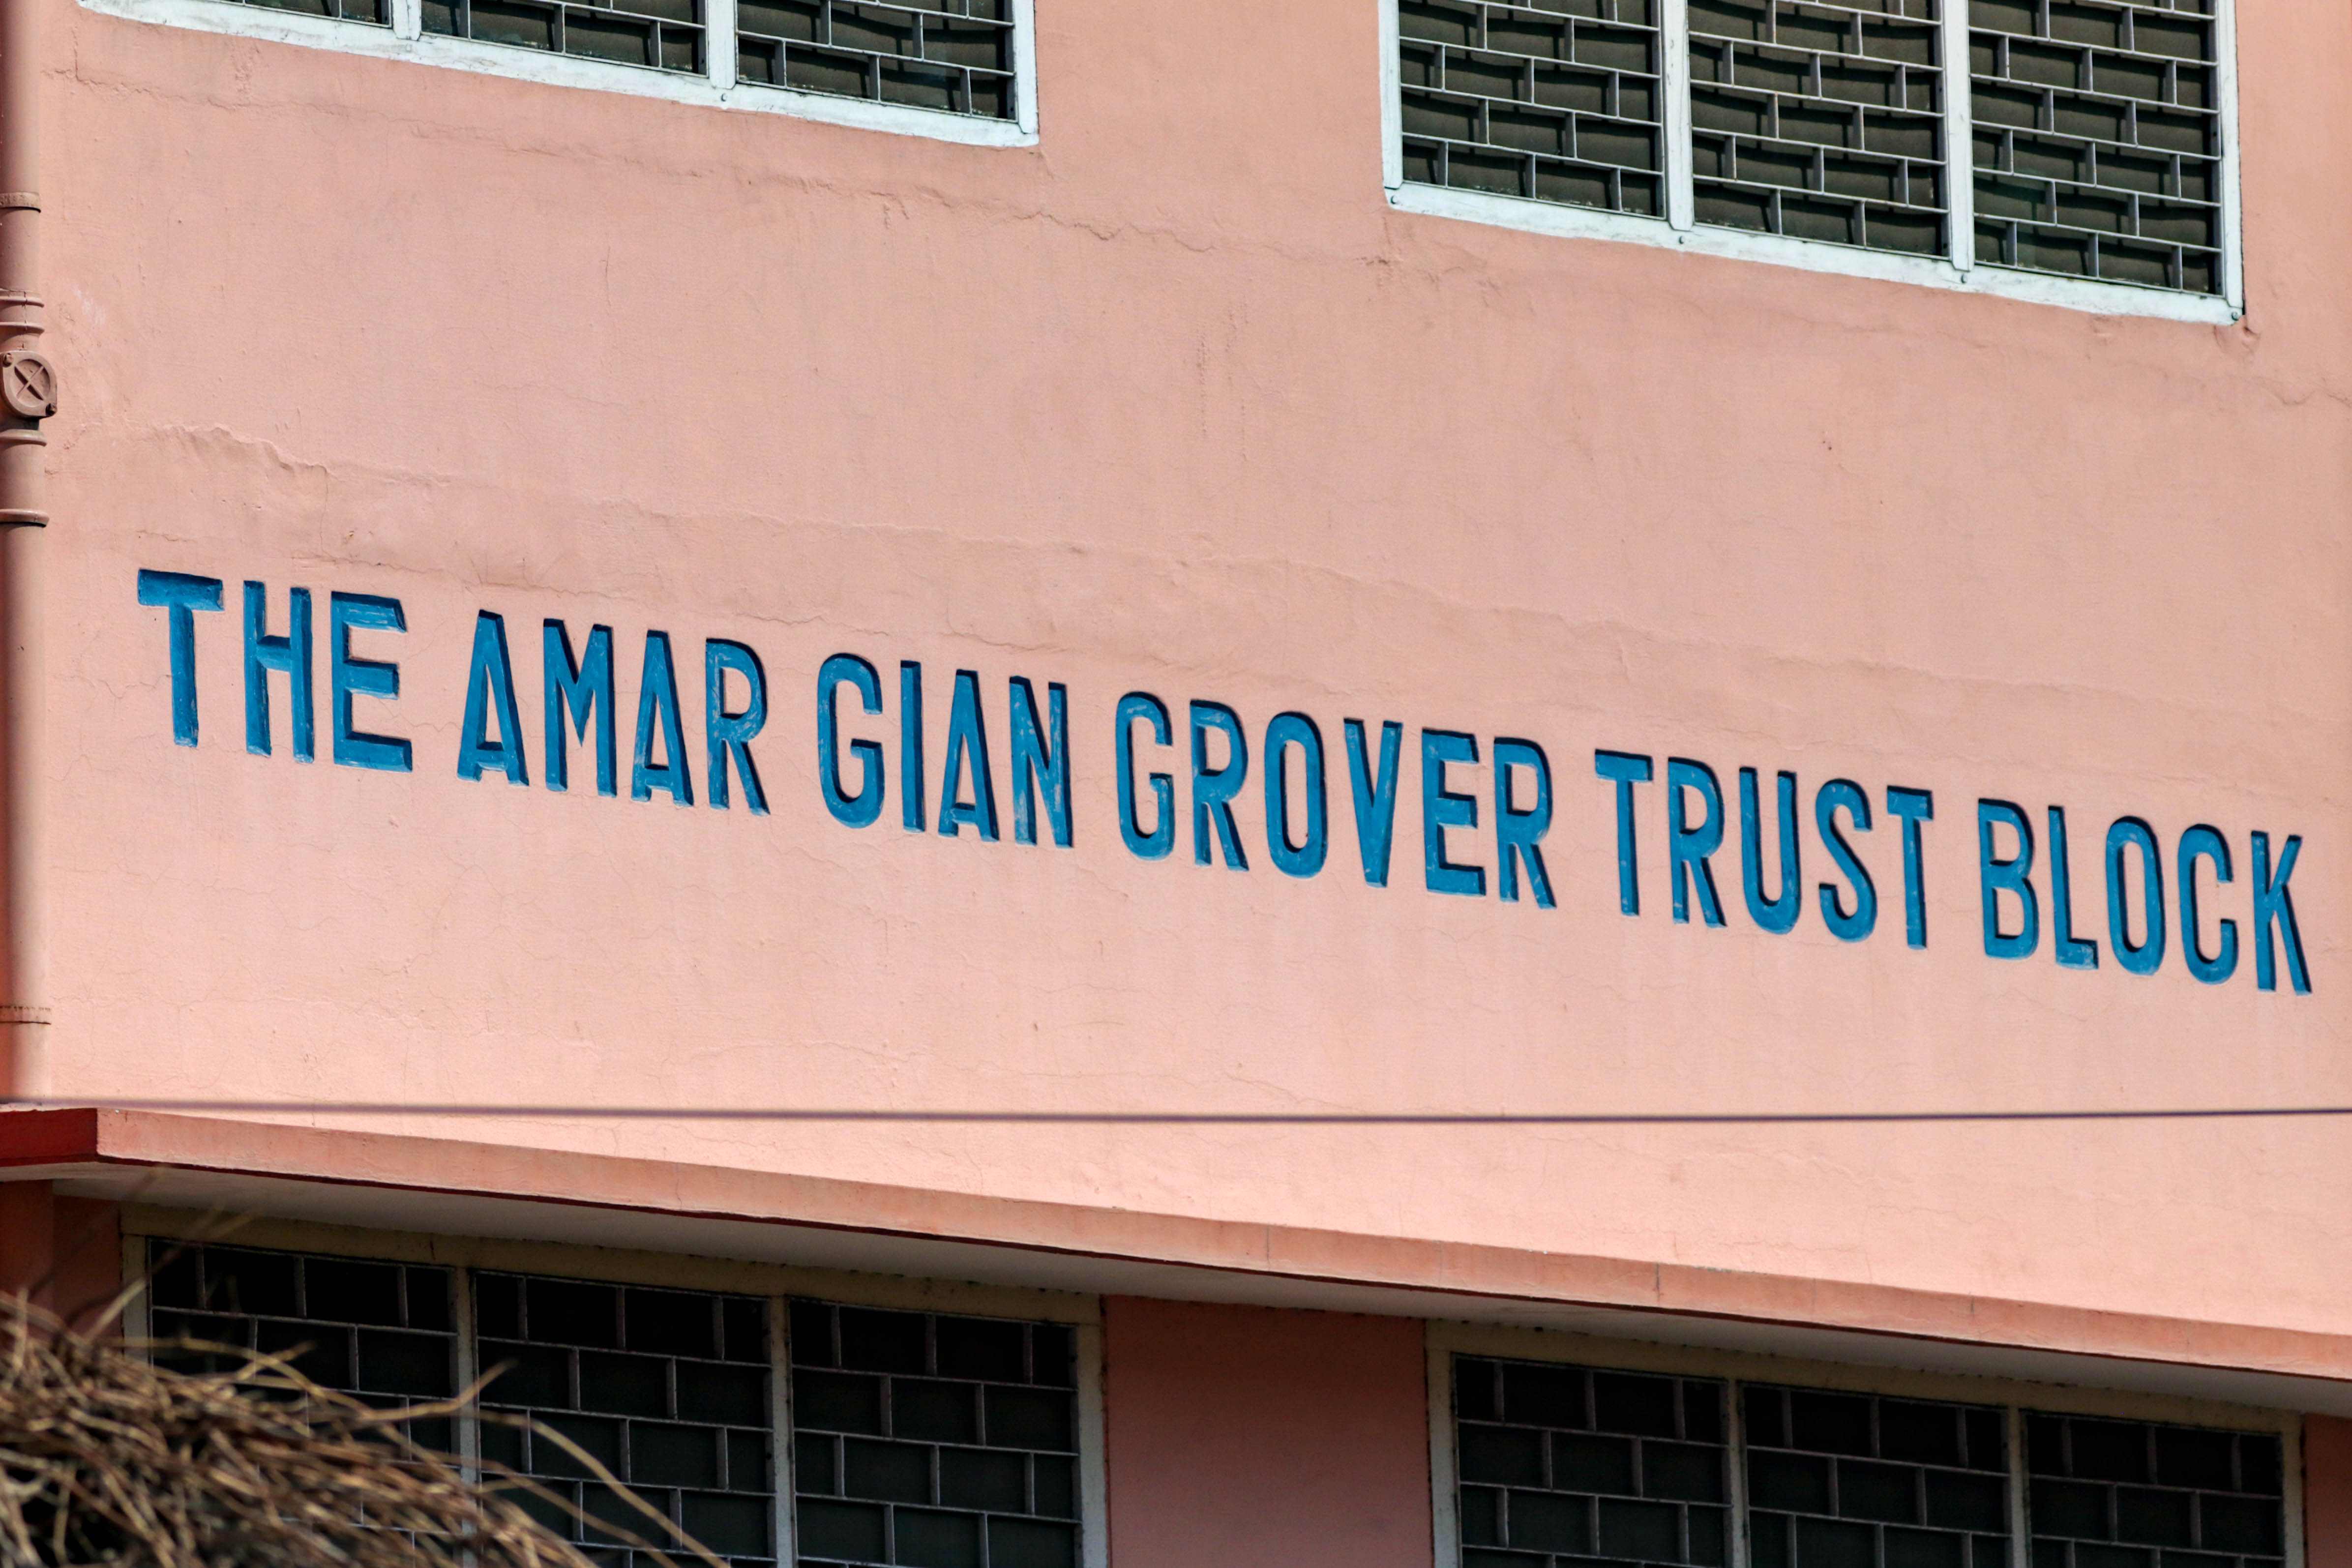 The Amar Gian Grover Trust Block